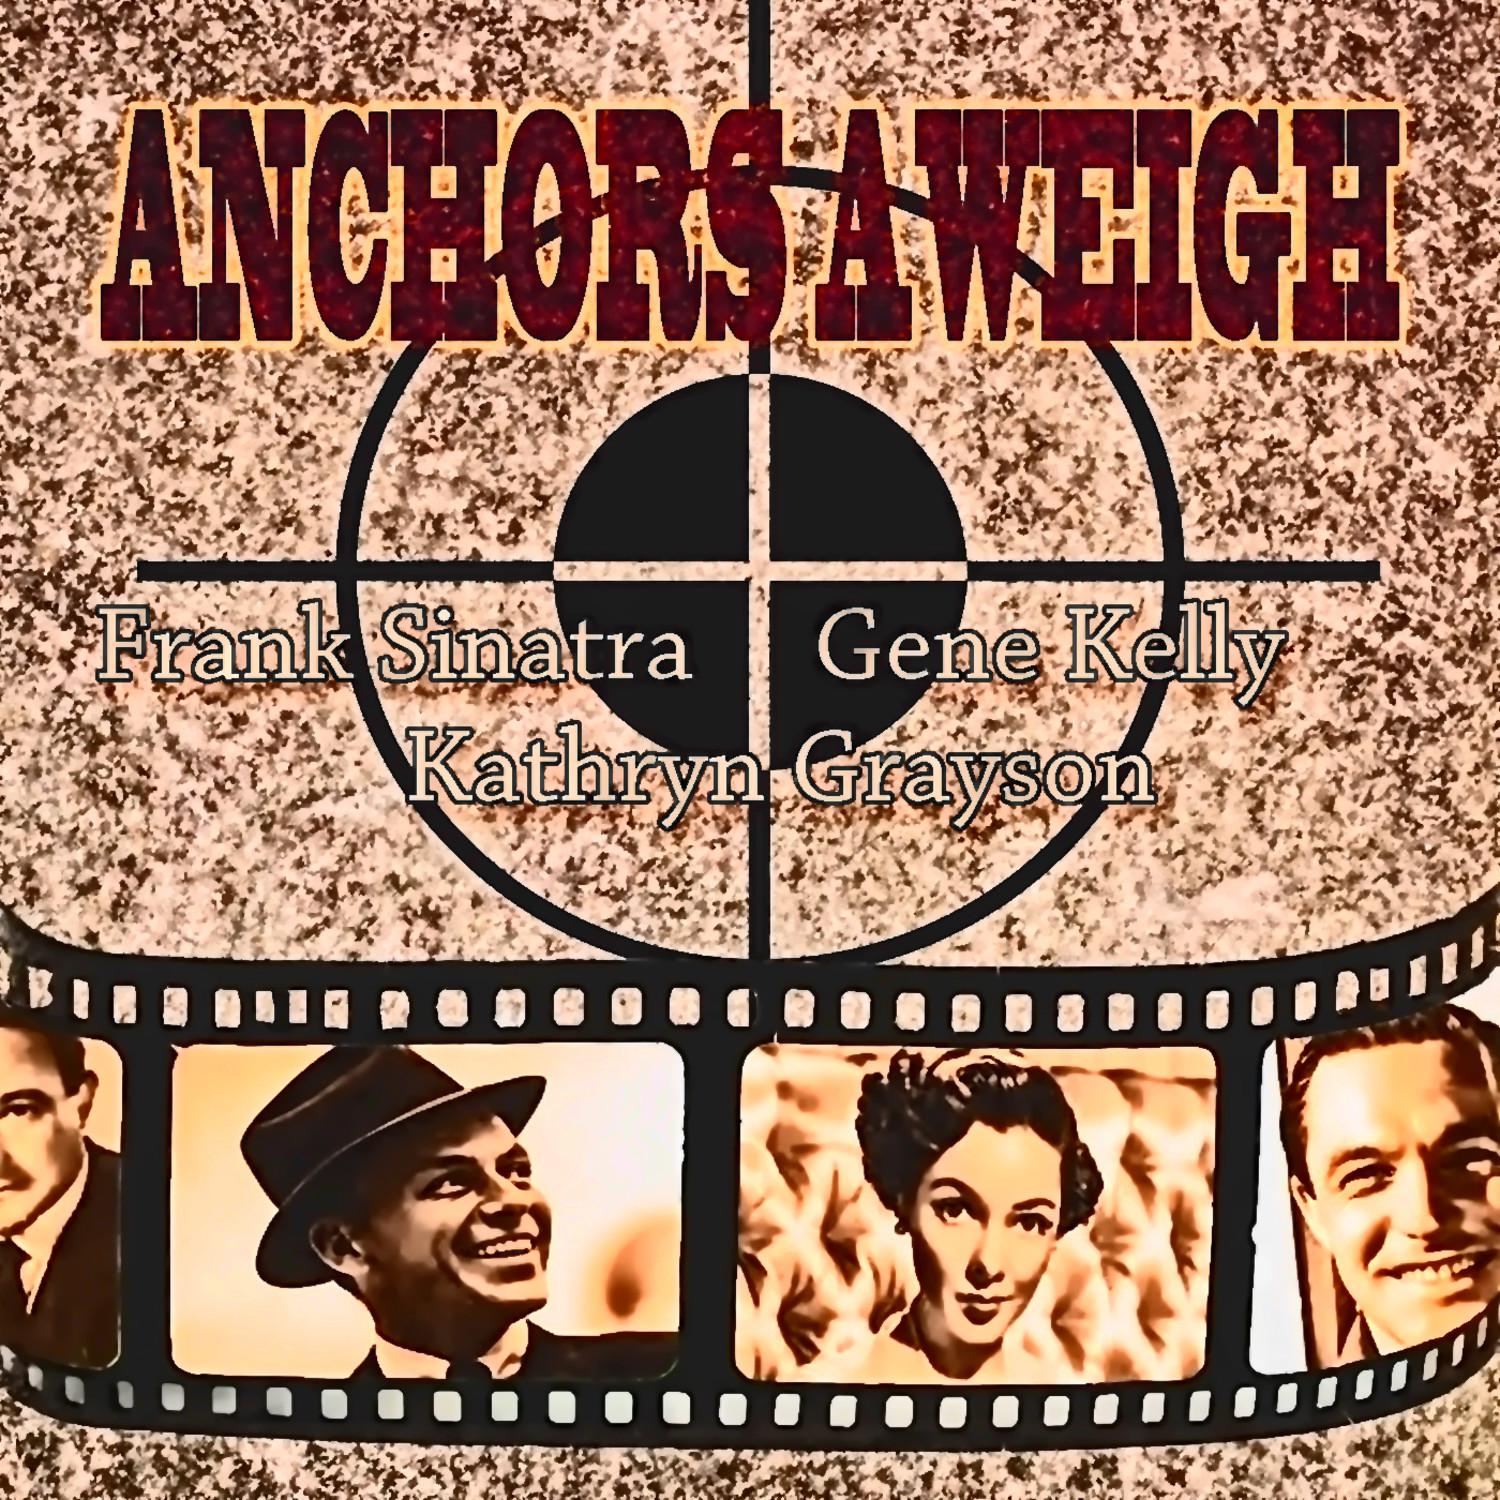 An Original Soundtrack Recording - Anchors Aweigh (Digitally Remastered)